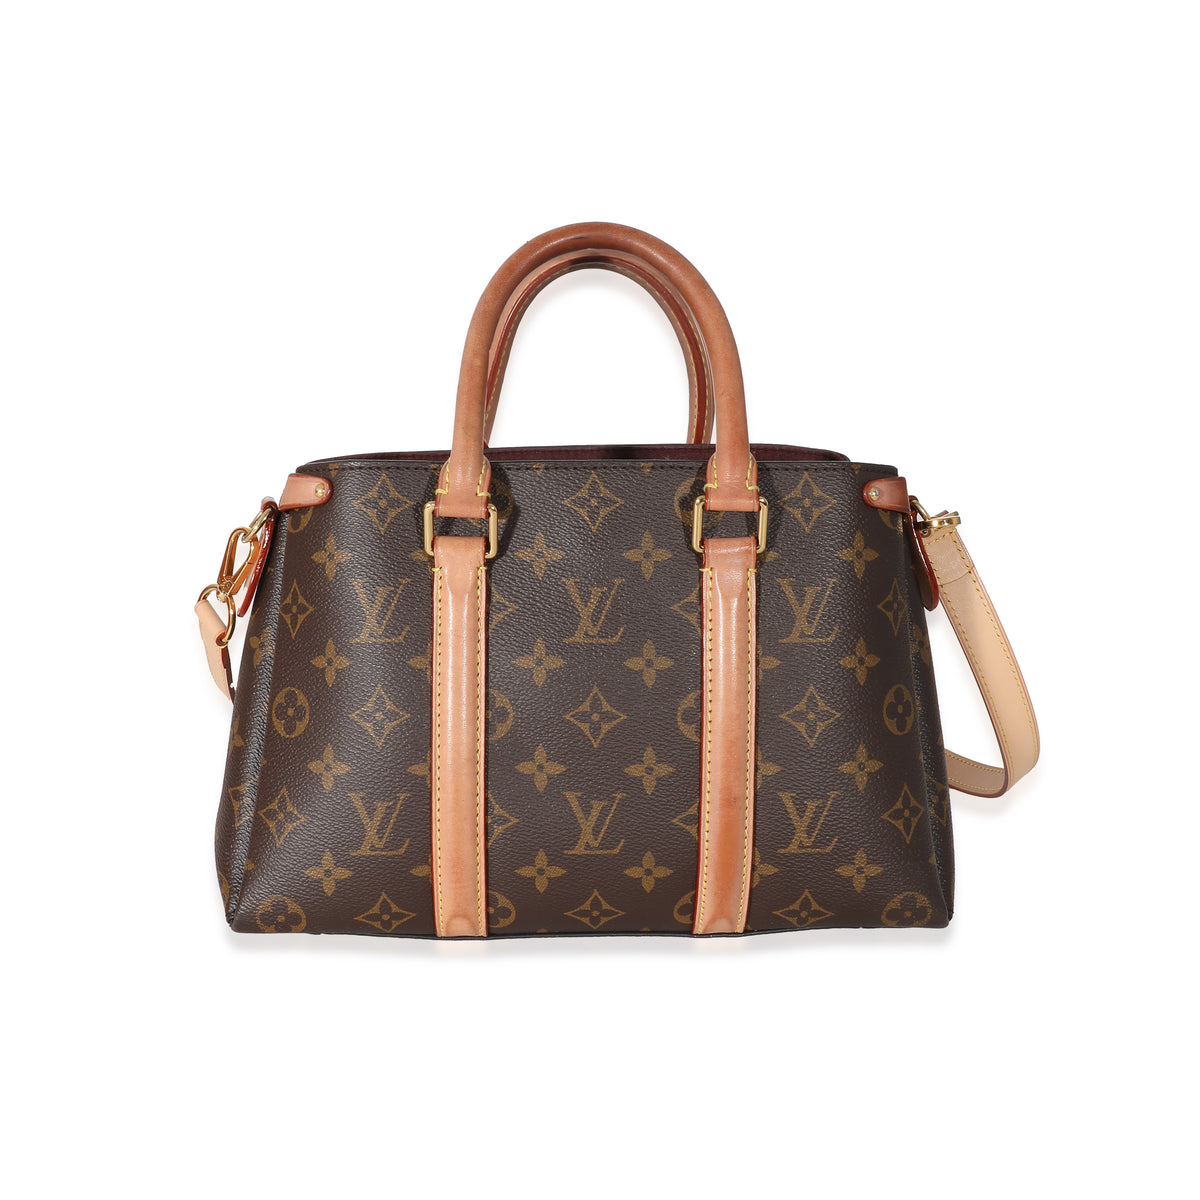 Soufflot BB Monogram Canvas/Colored leather in Brown - Handbags M44898, LOUIS  VUITTON